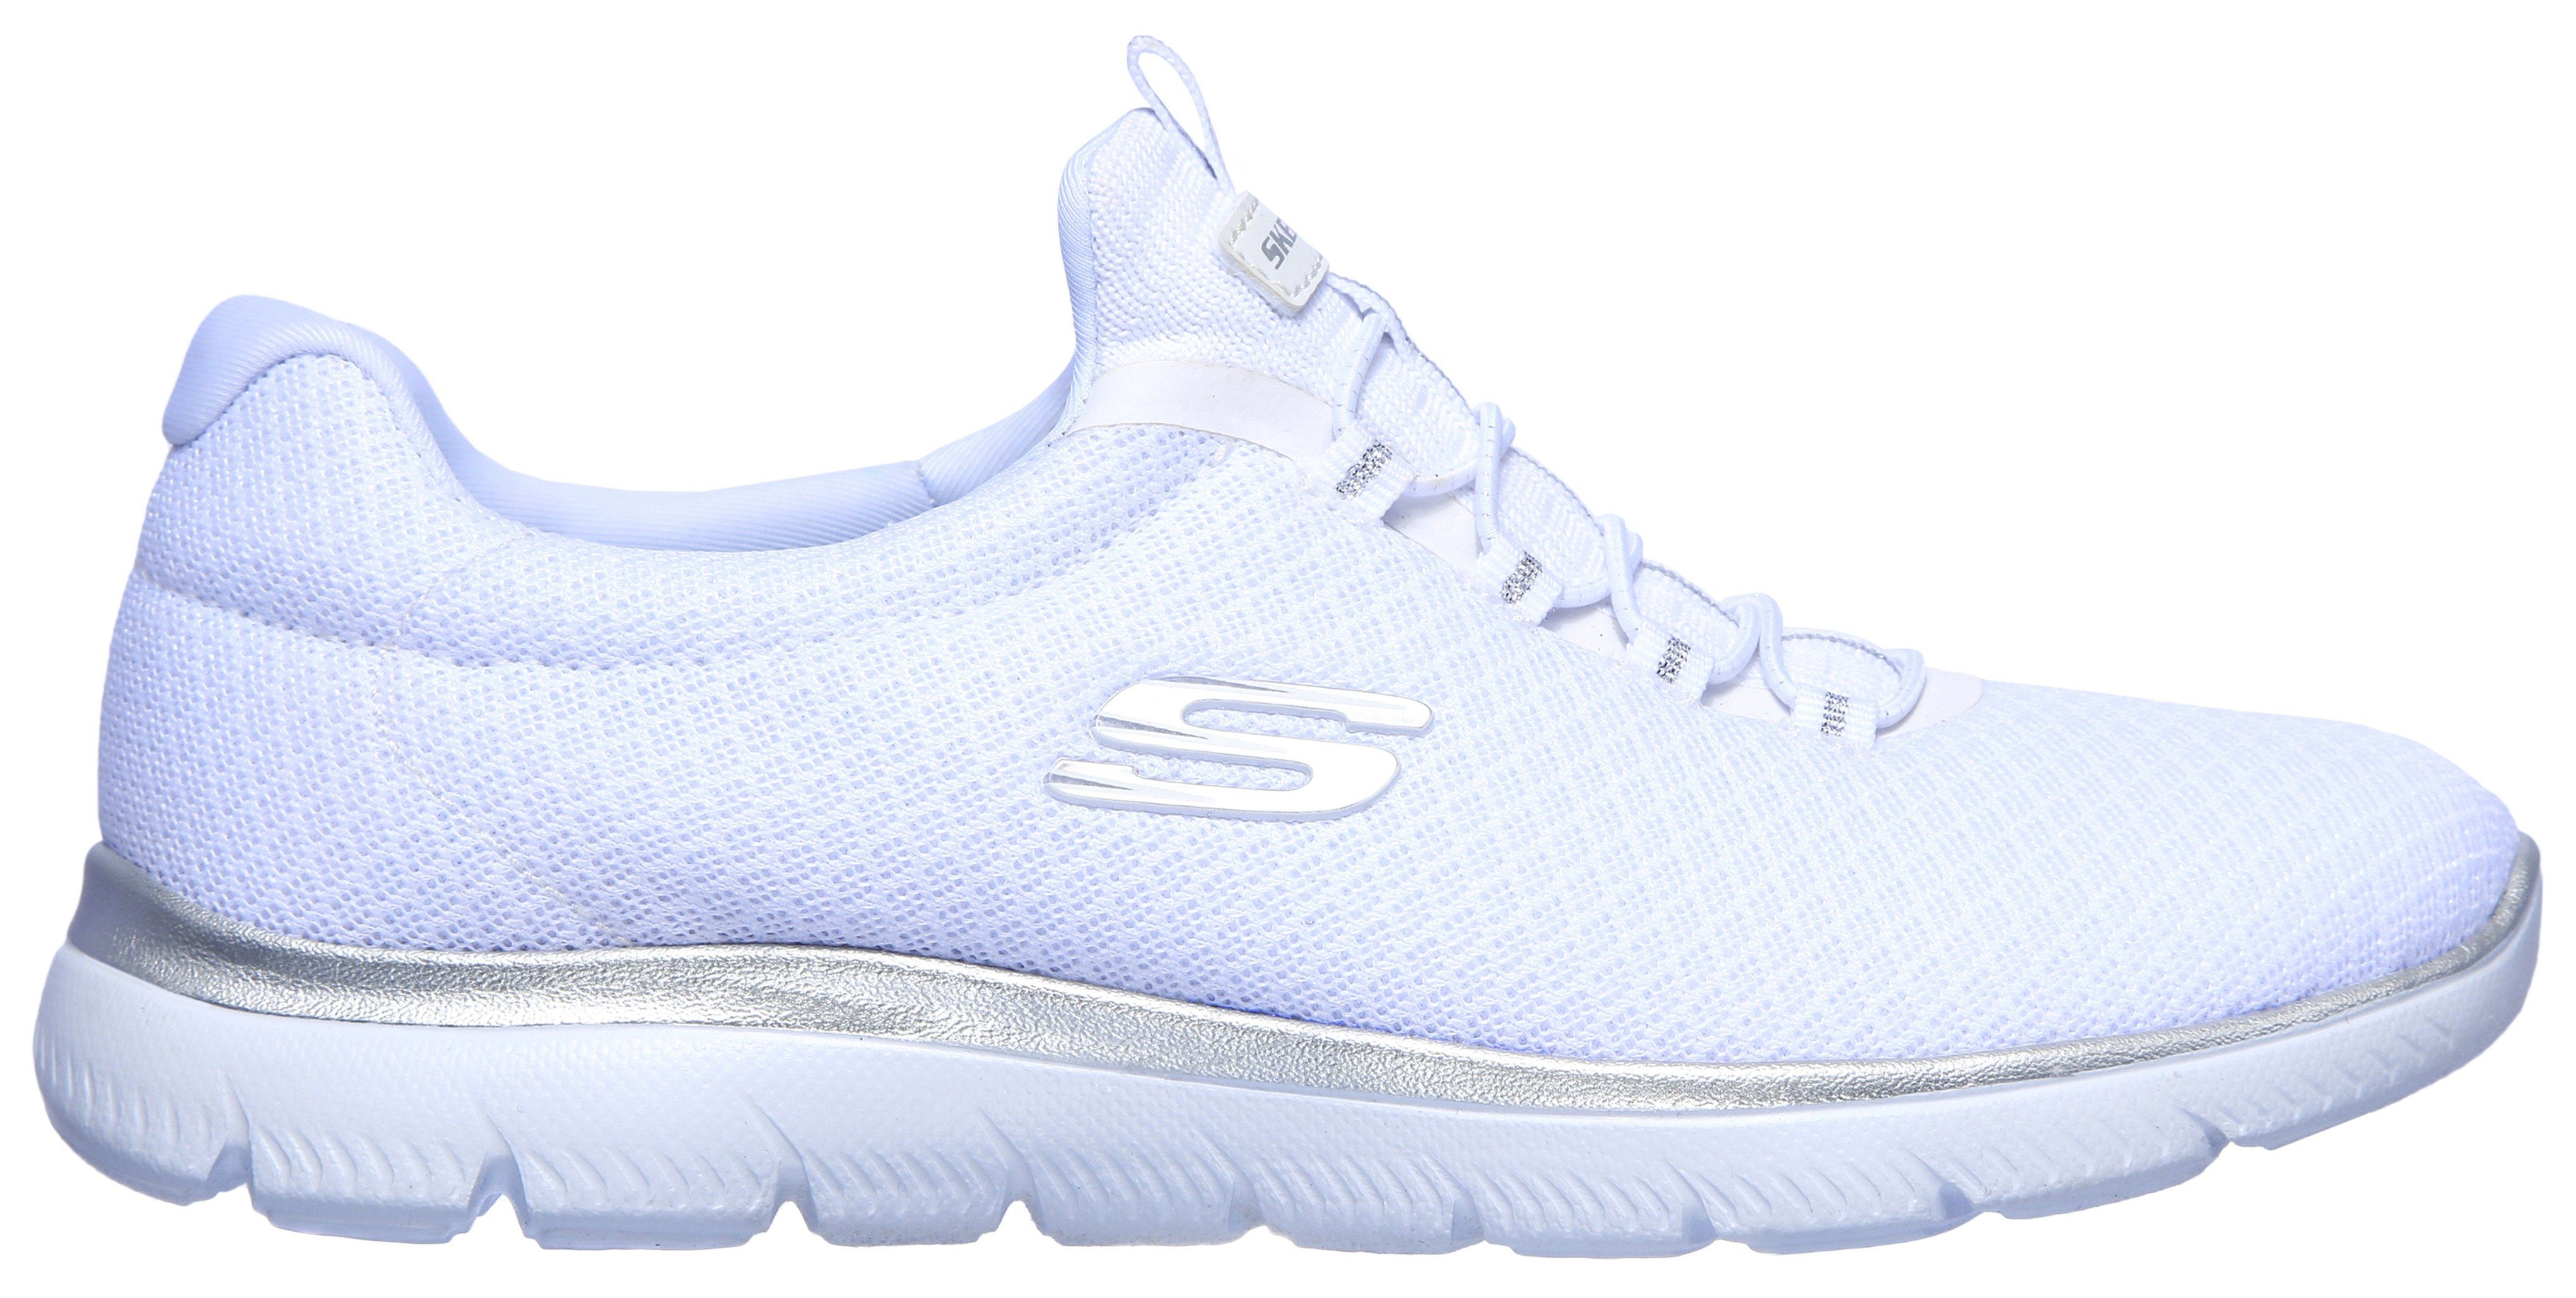 Skechers dezenten Slip-On SUMMITS Sneaker Kontrast-Details mit weiß-silberfarben